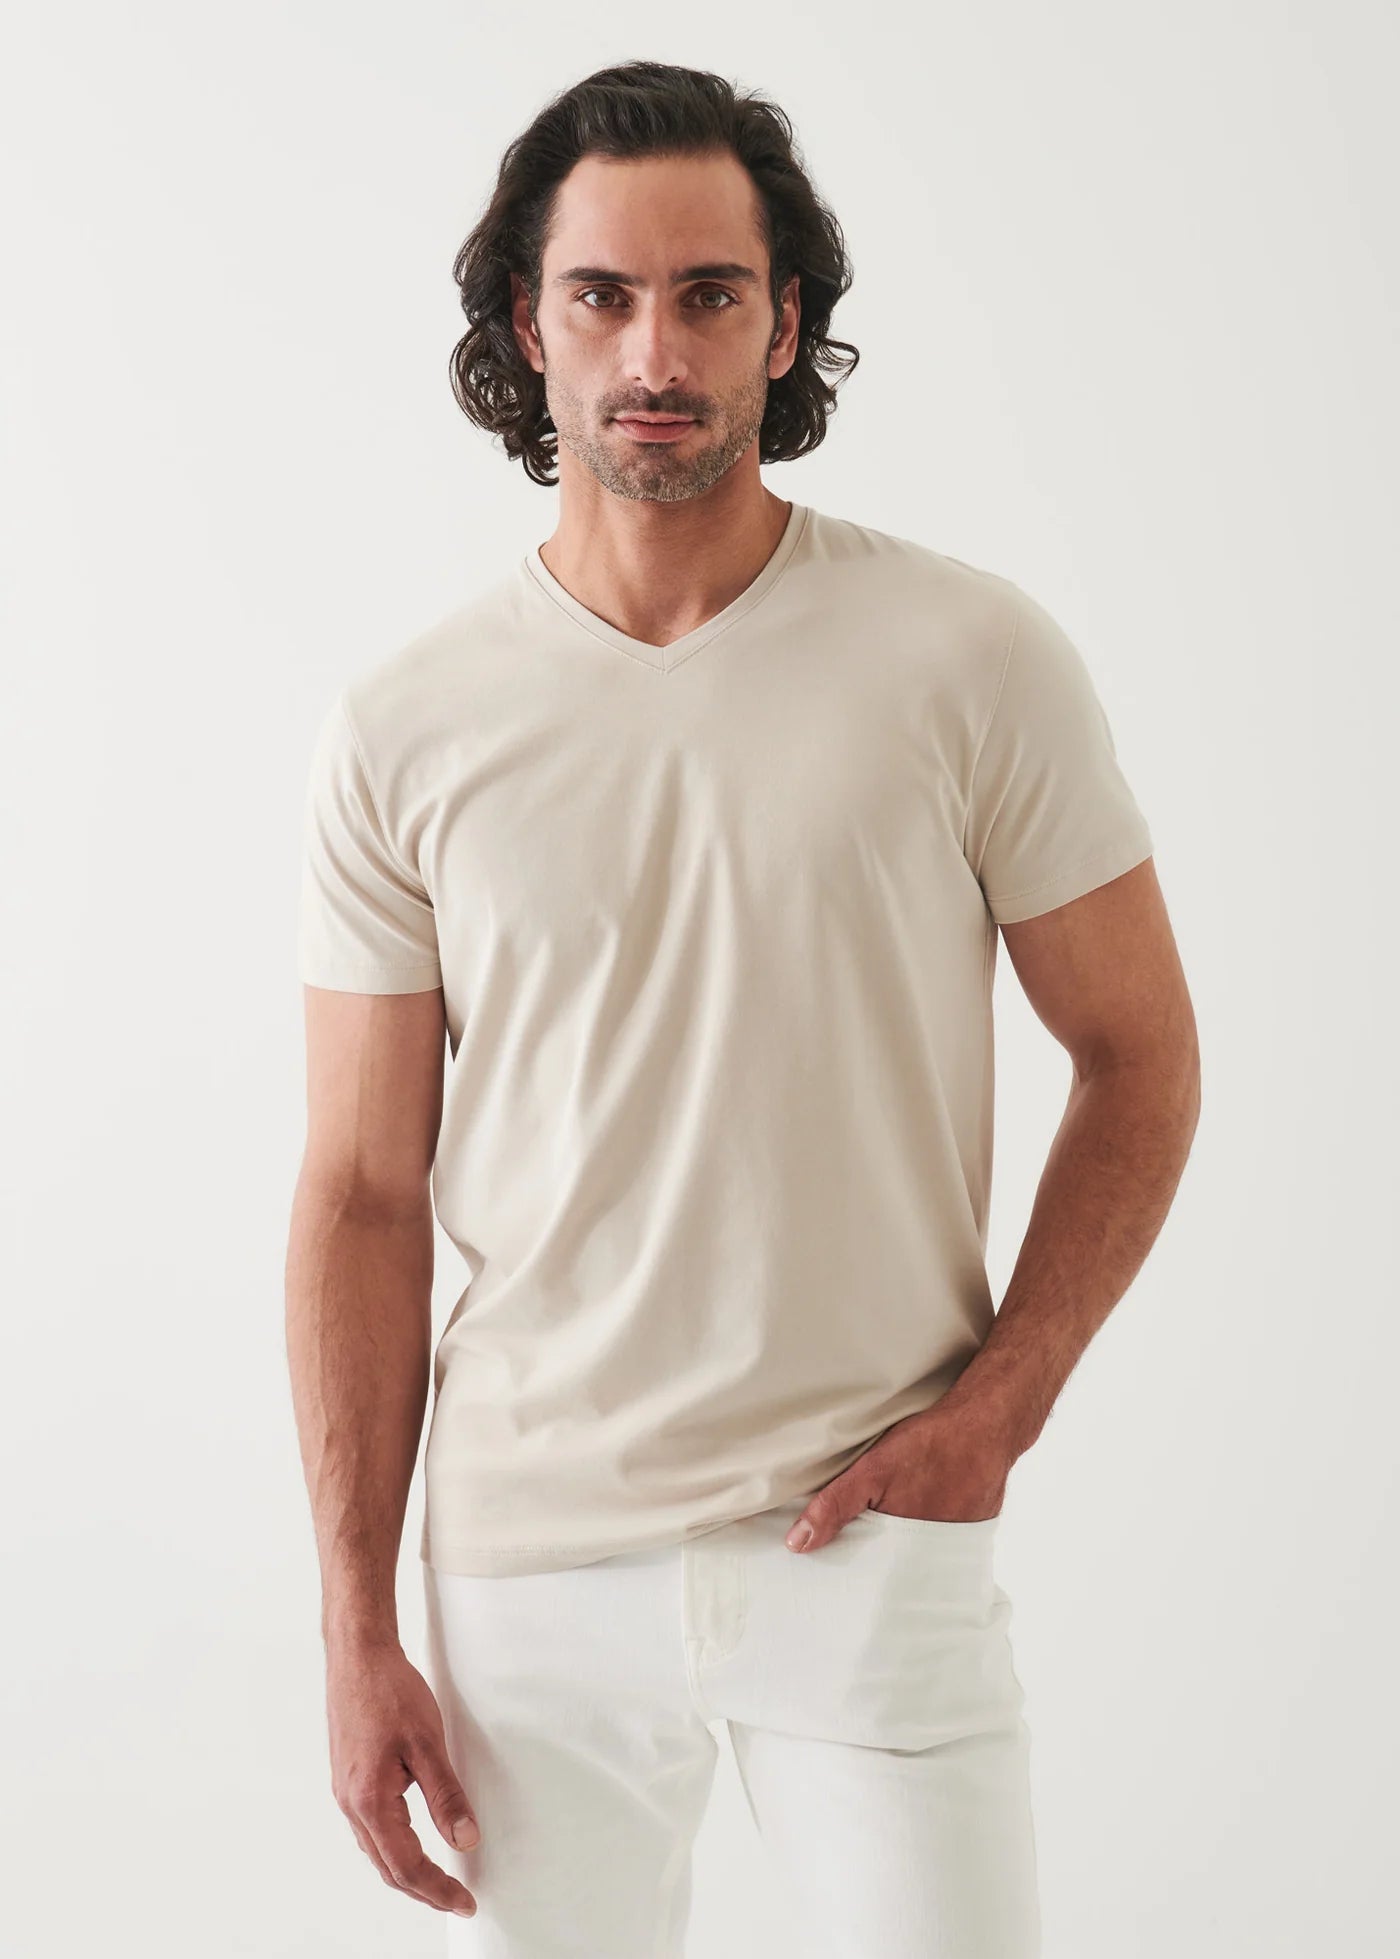 Patrick Assaraf Iconic V-Neck Pima Cotton Stretch T-Shirt in Wheat